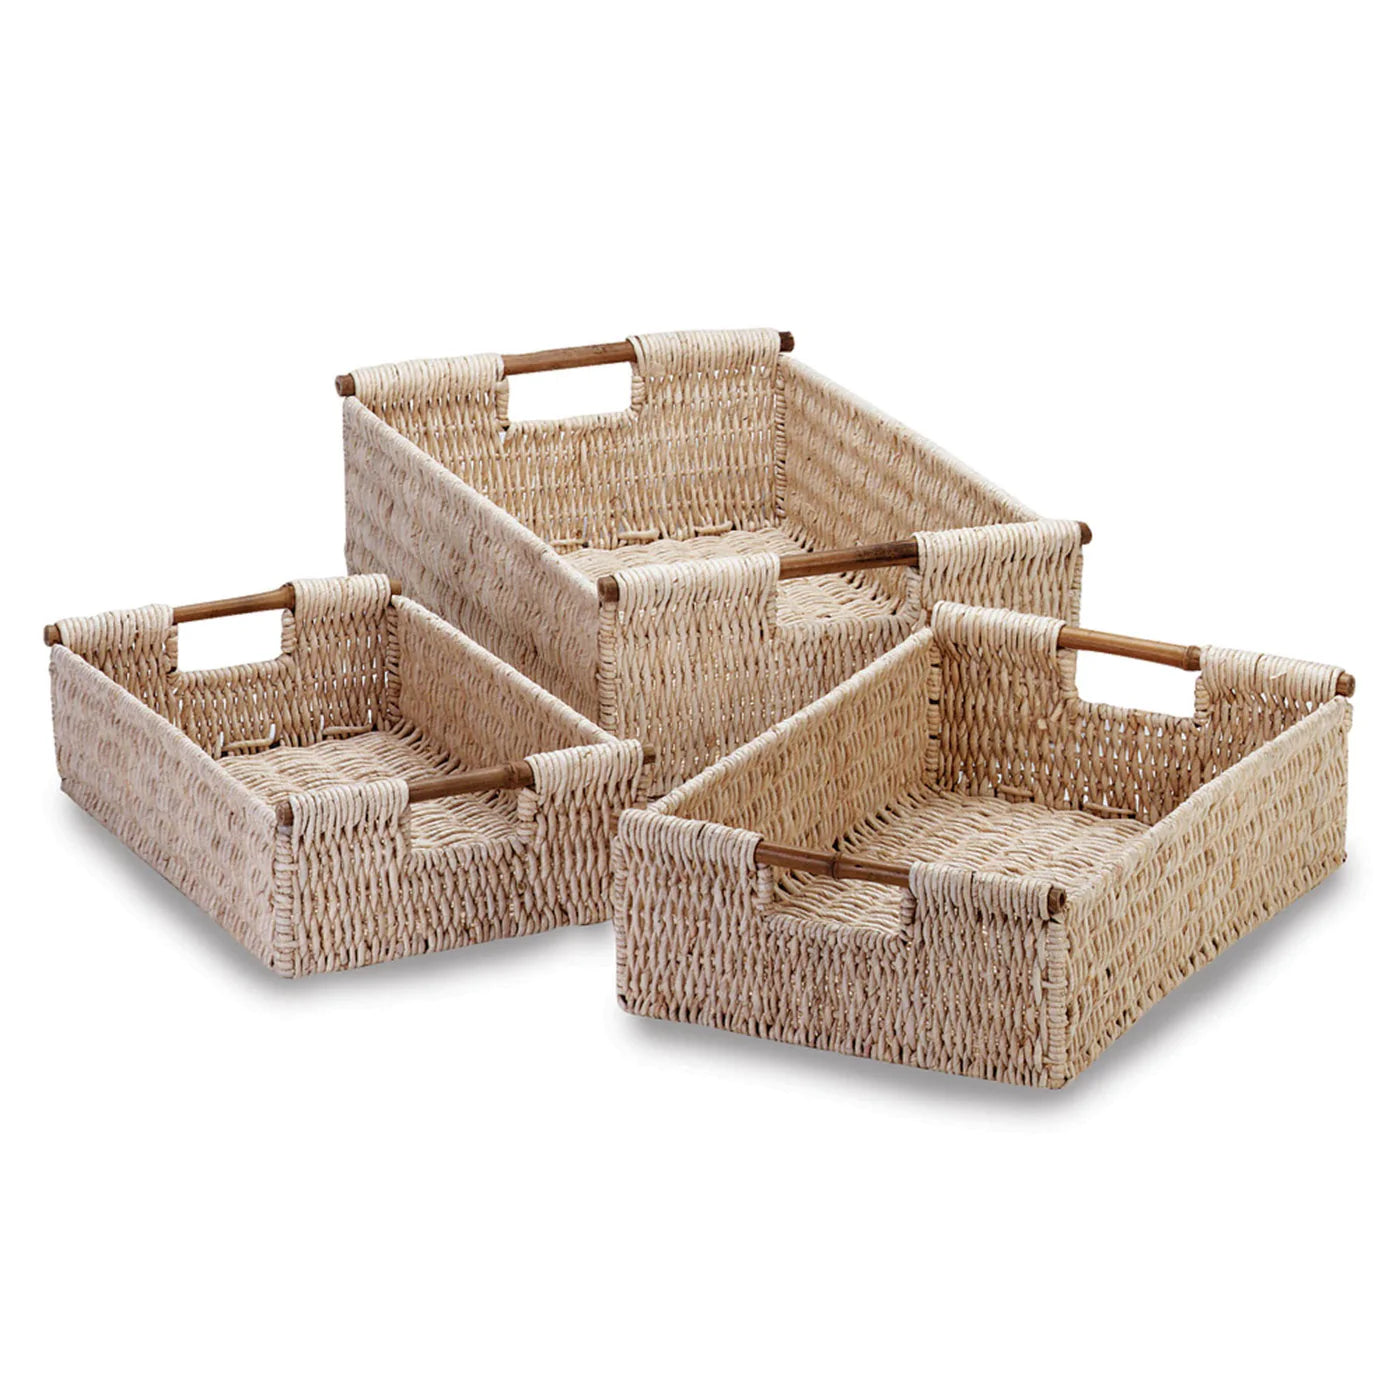 Corn Husk Nesting Baskets